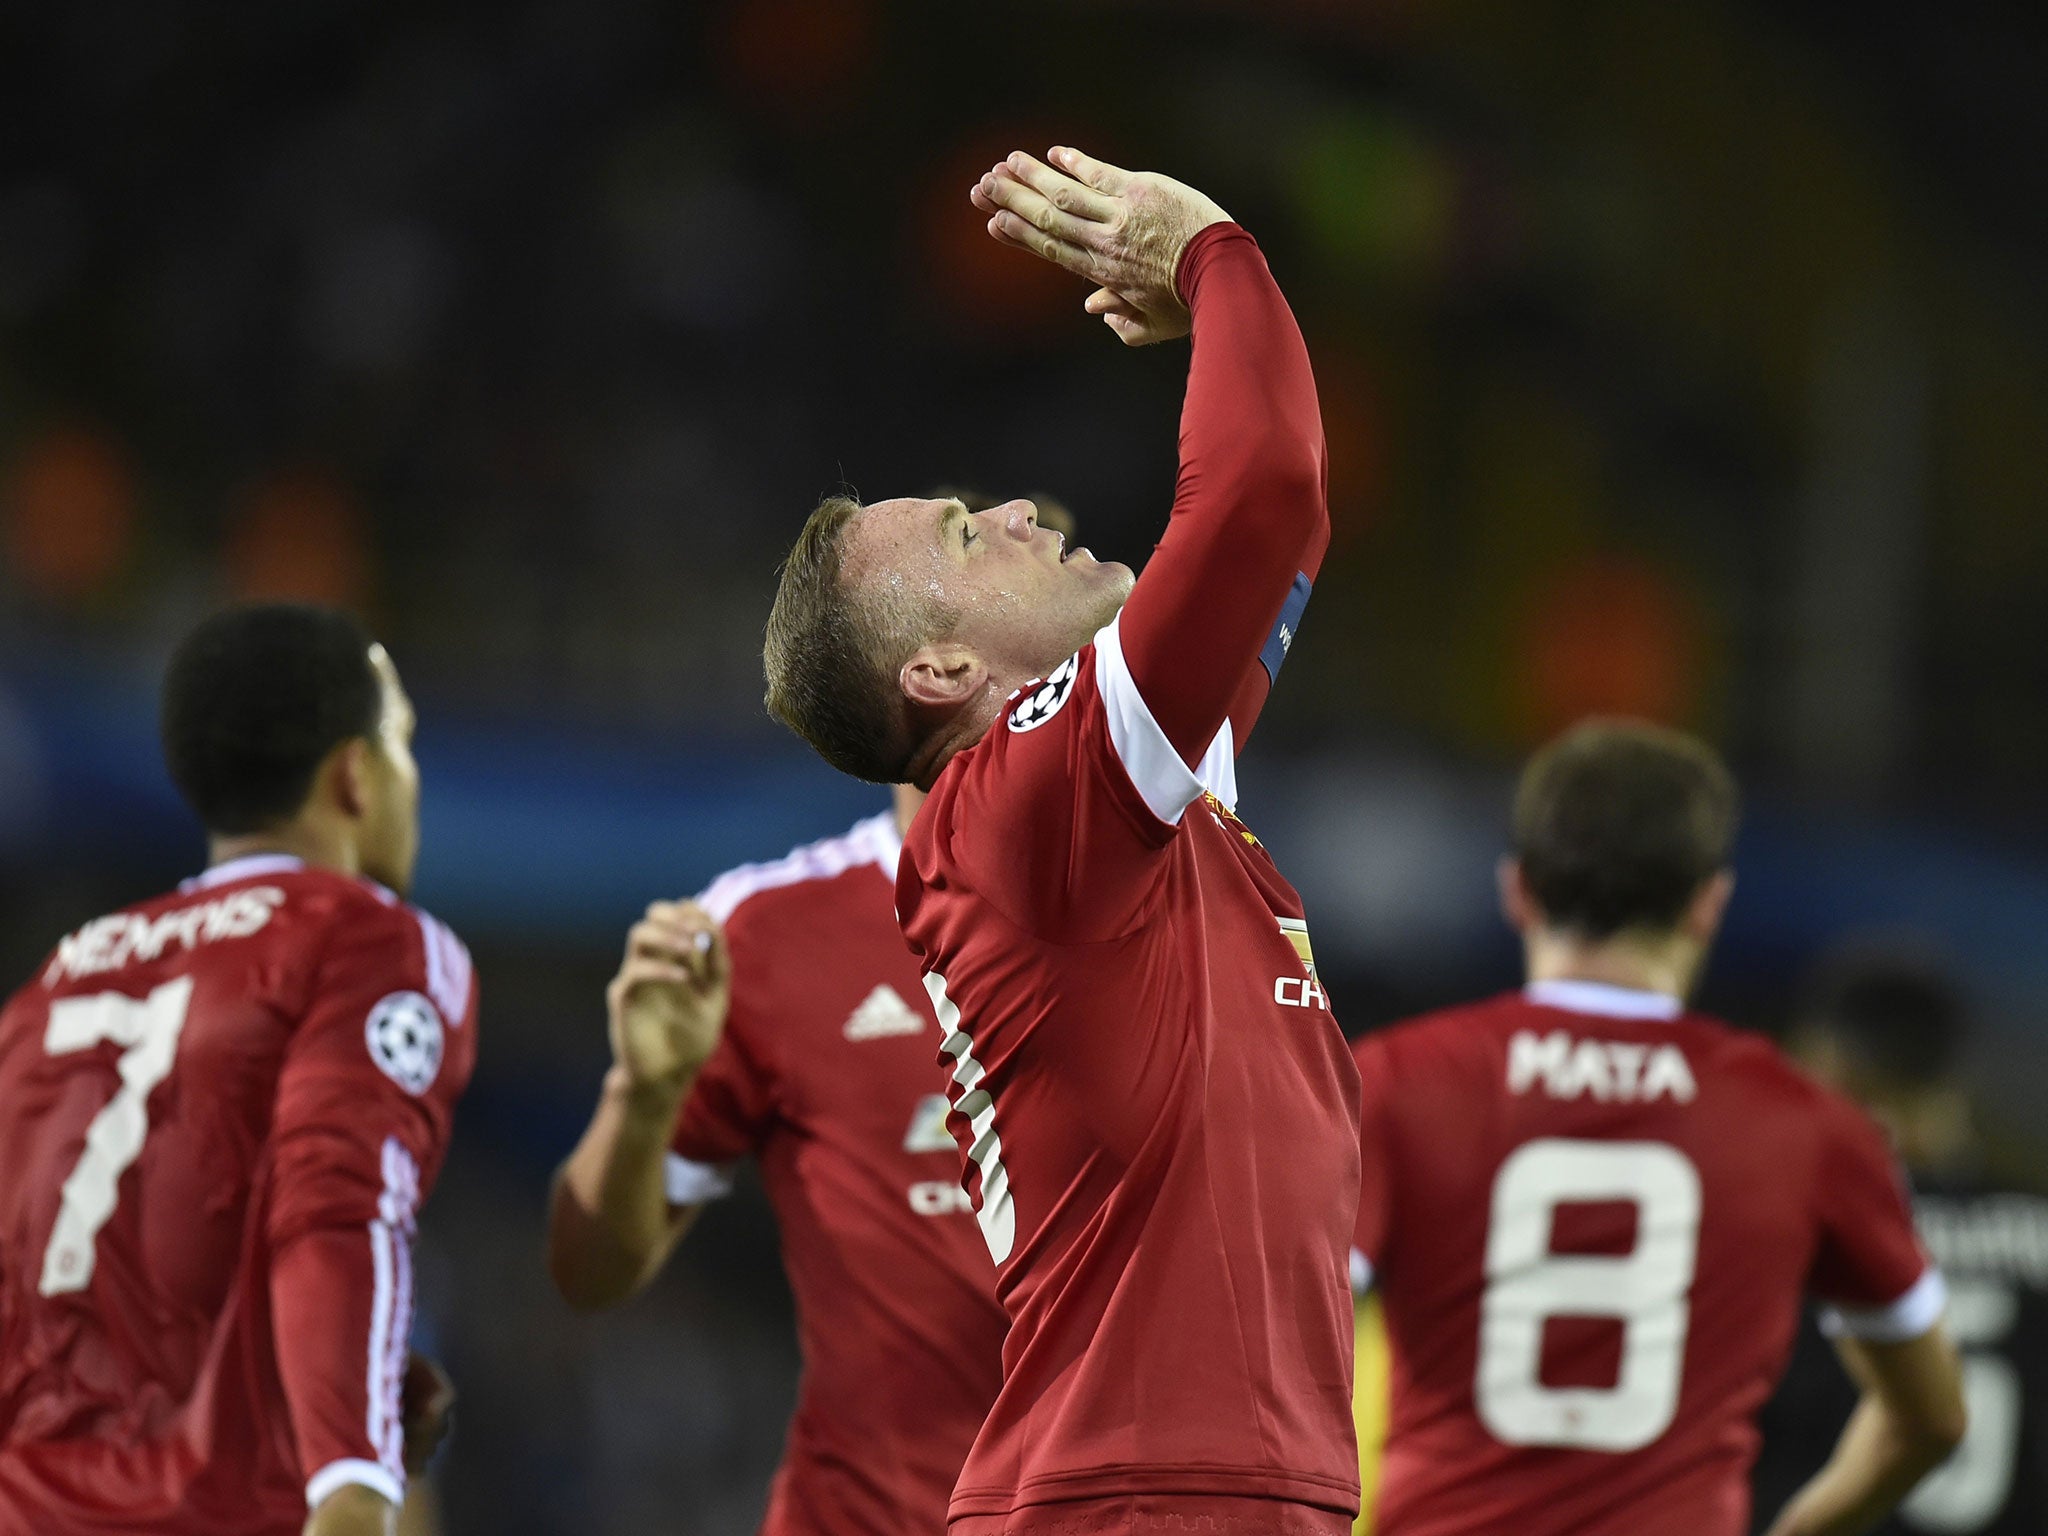 Wayne Rooney celebrates his goal against Club Brugge